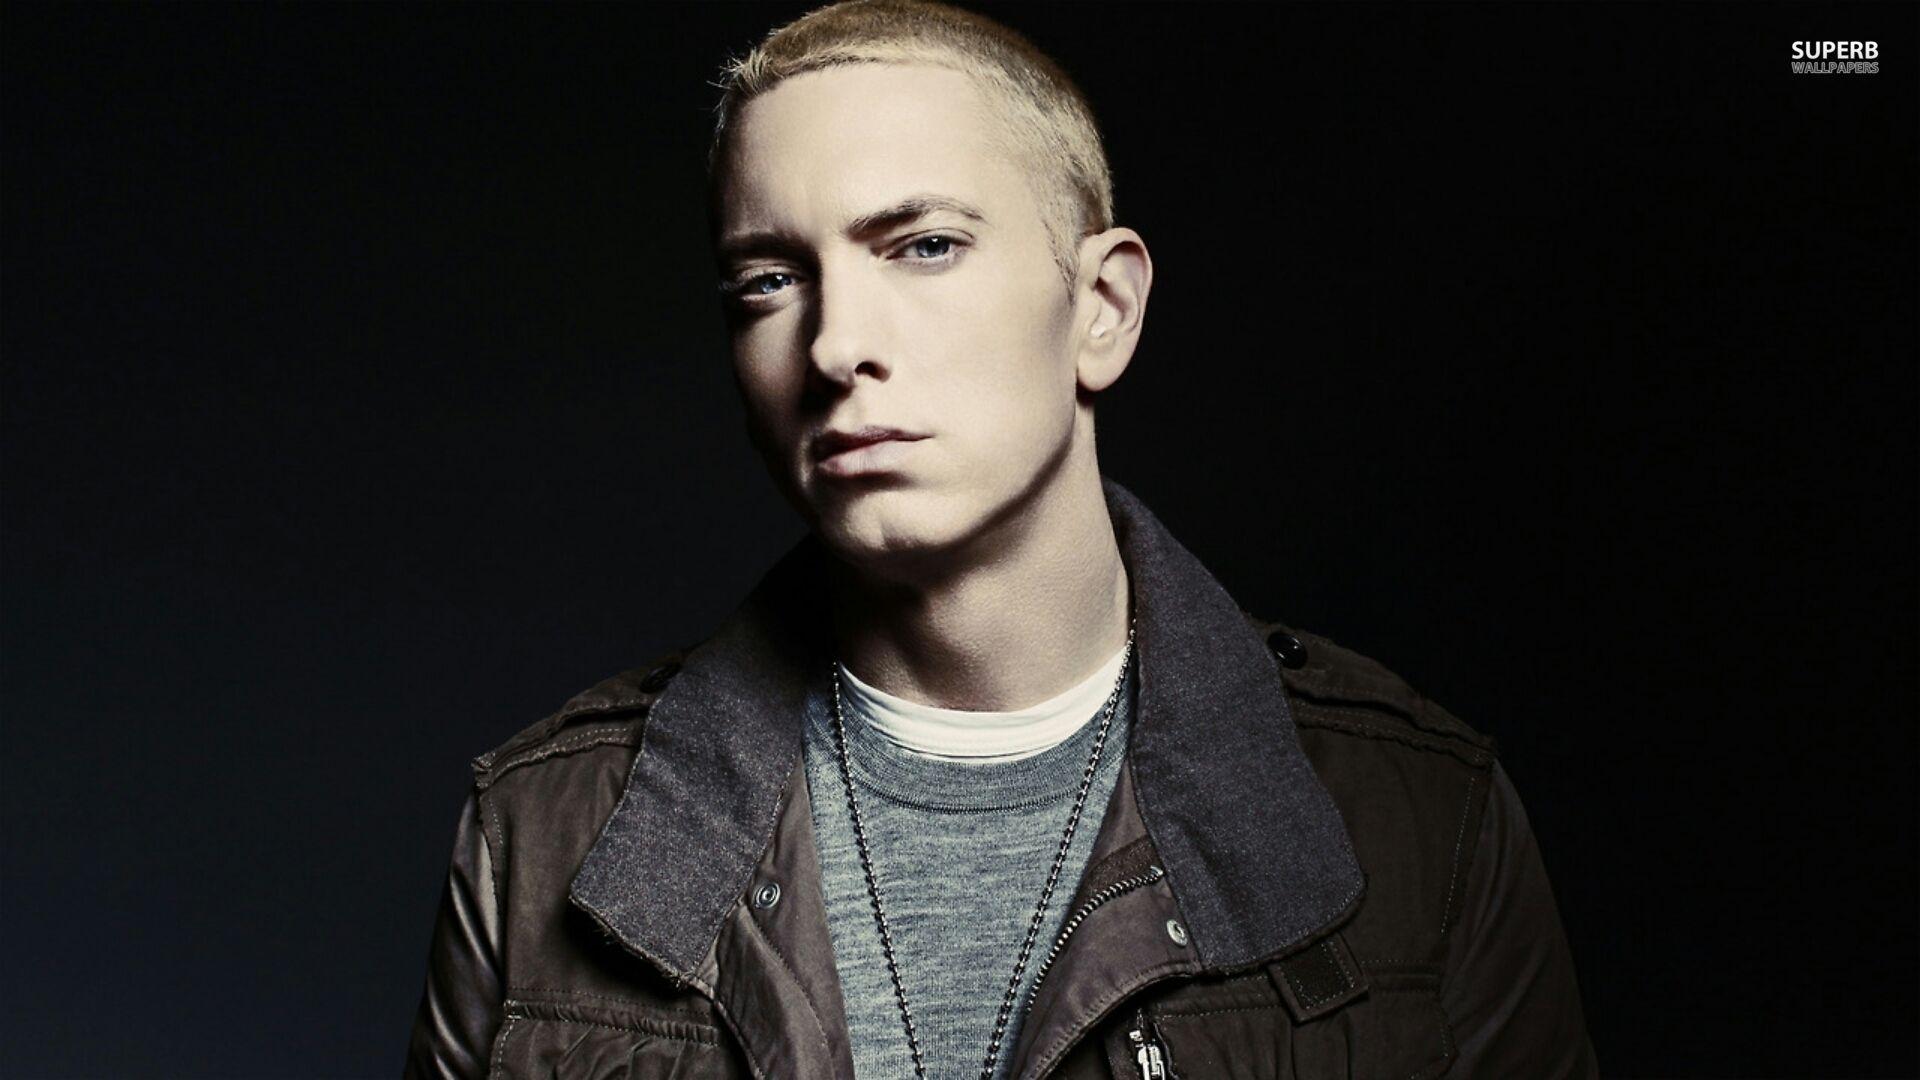 Eminem Wallpaper, Picture, Image